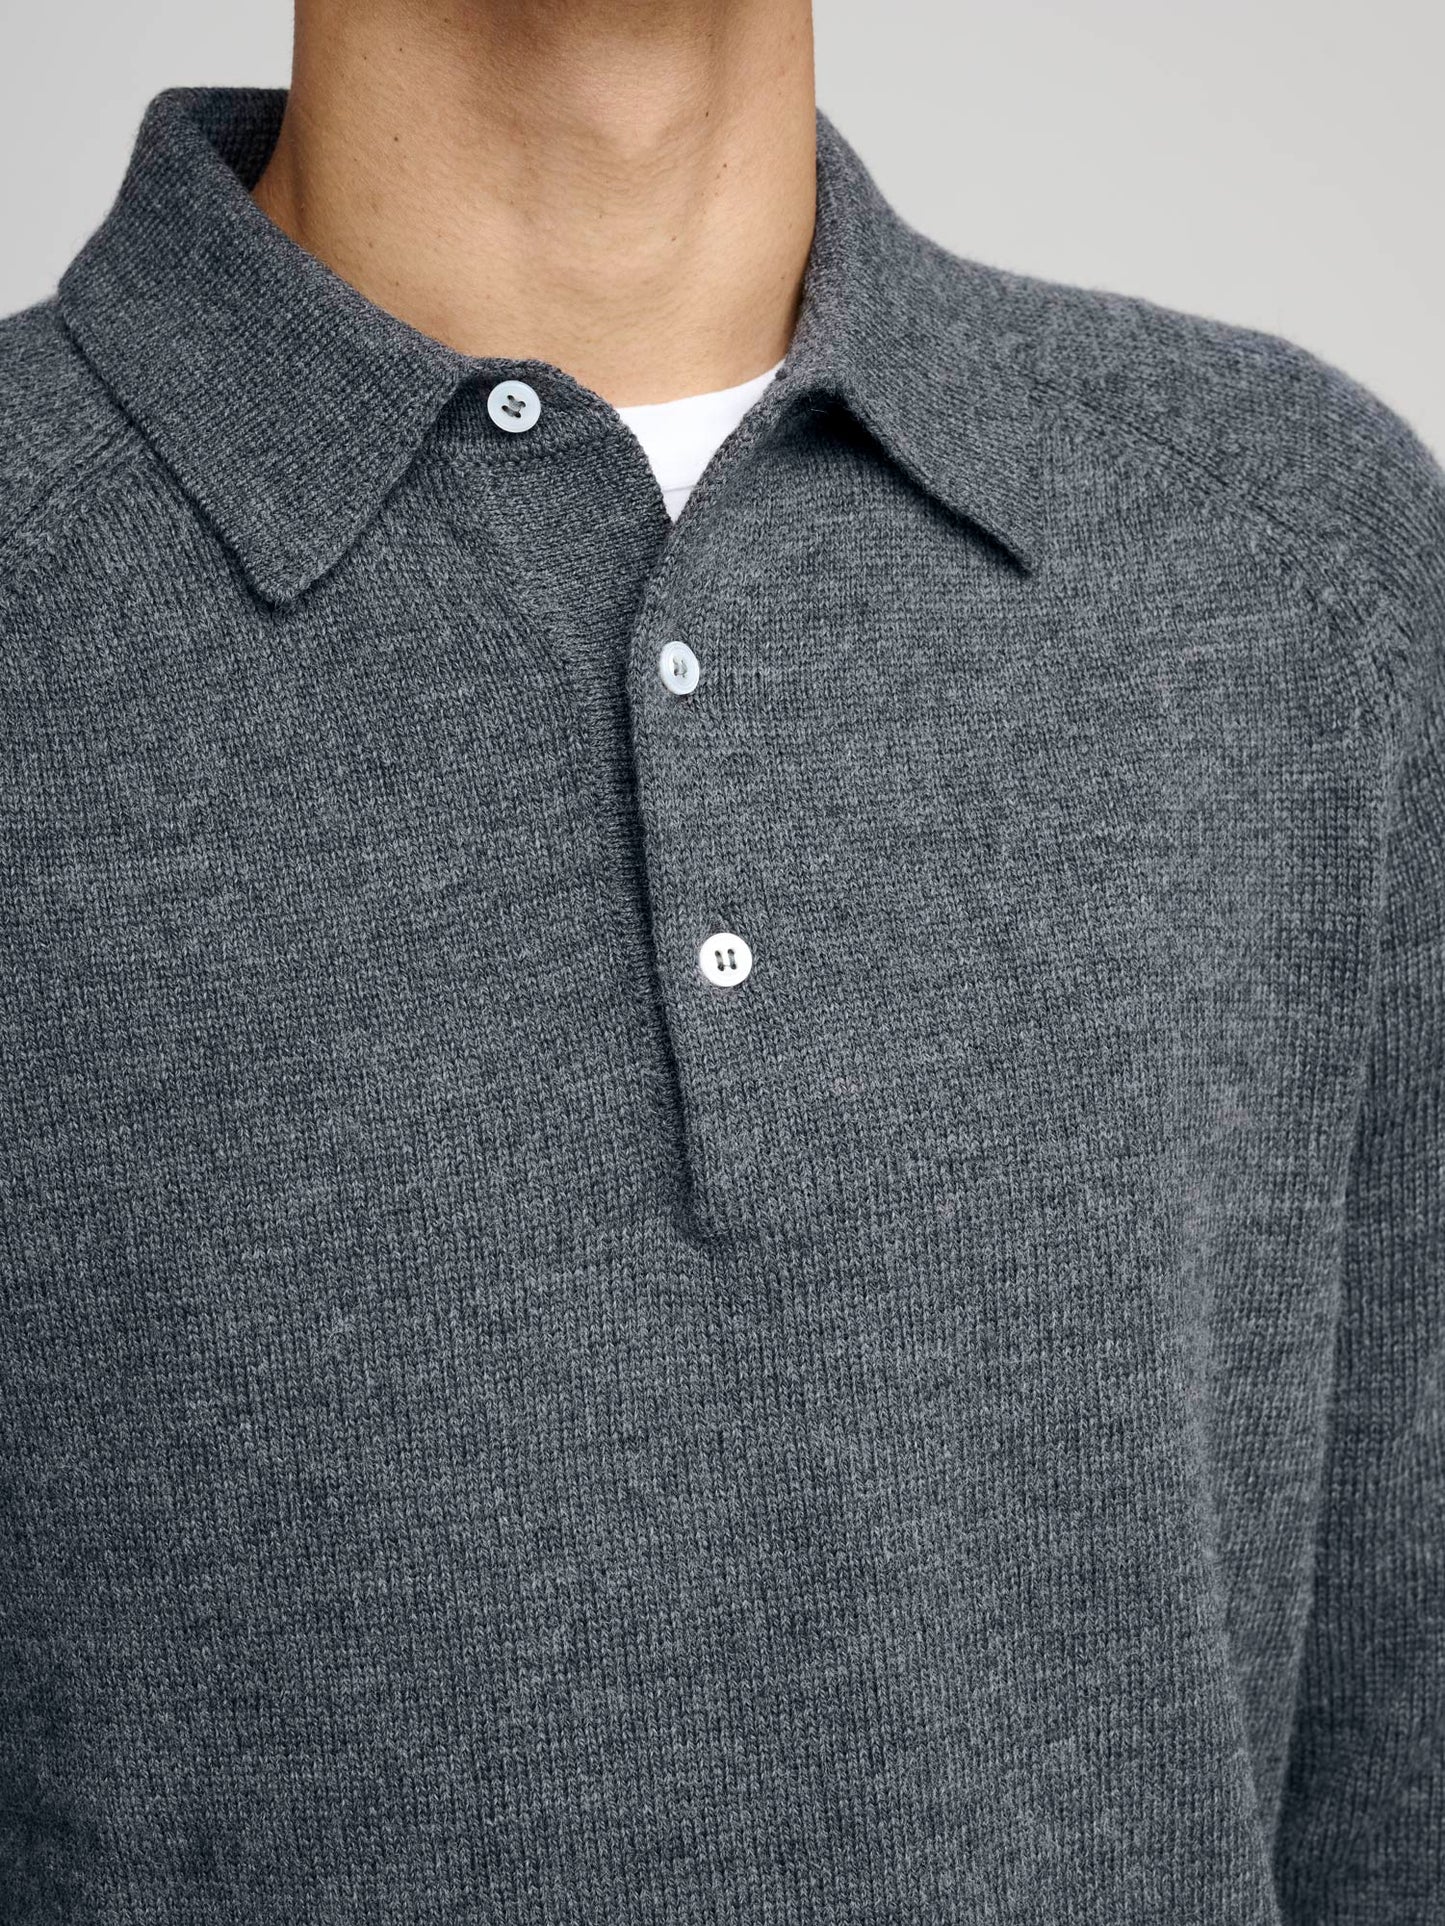 Long Sleeve Merino Wool Knitted Polo, Grey